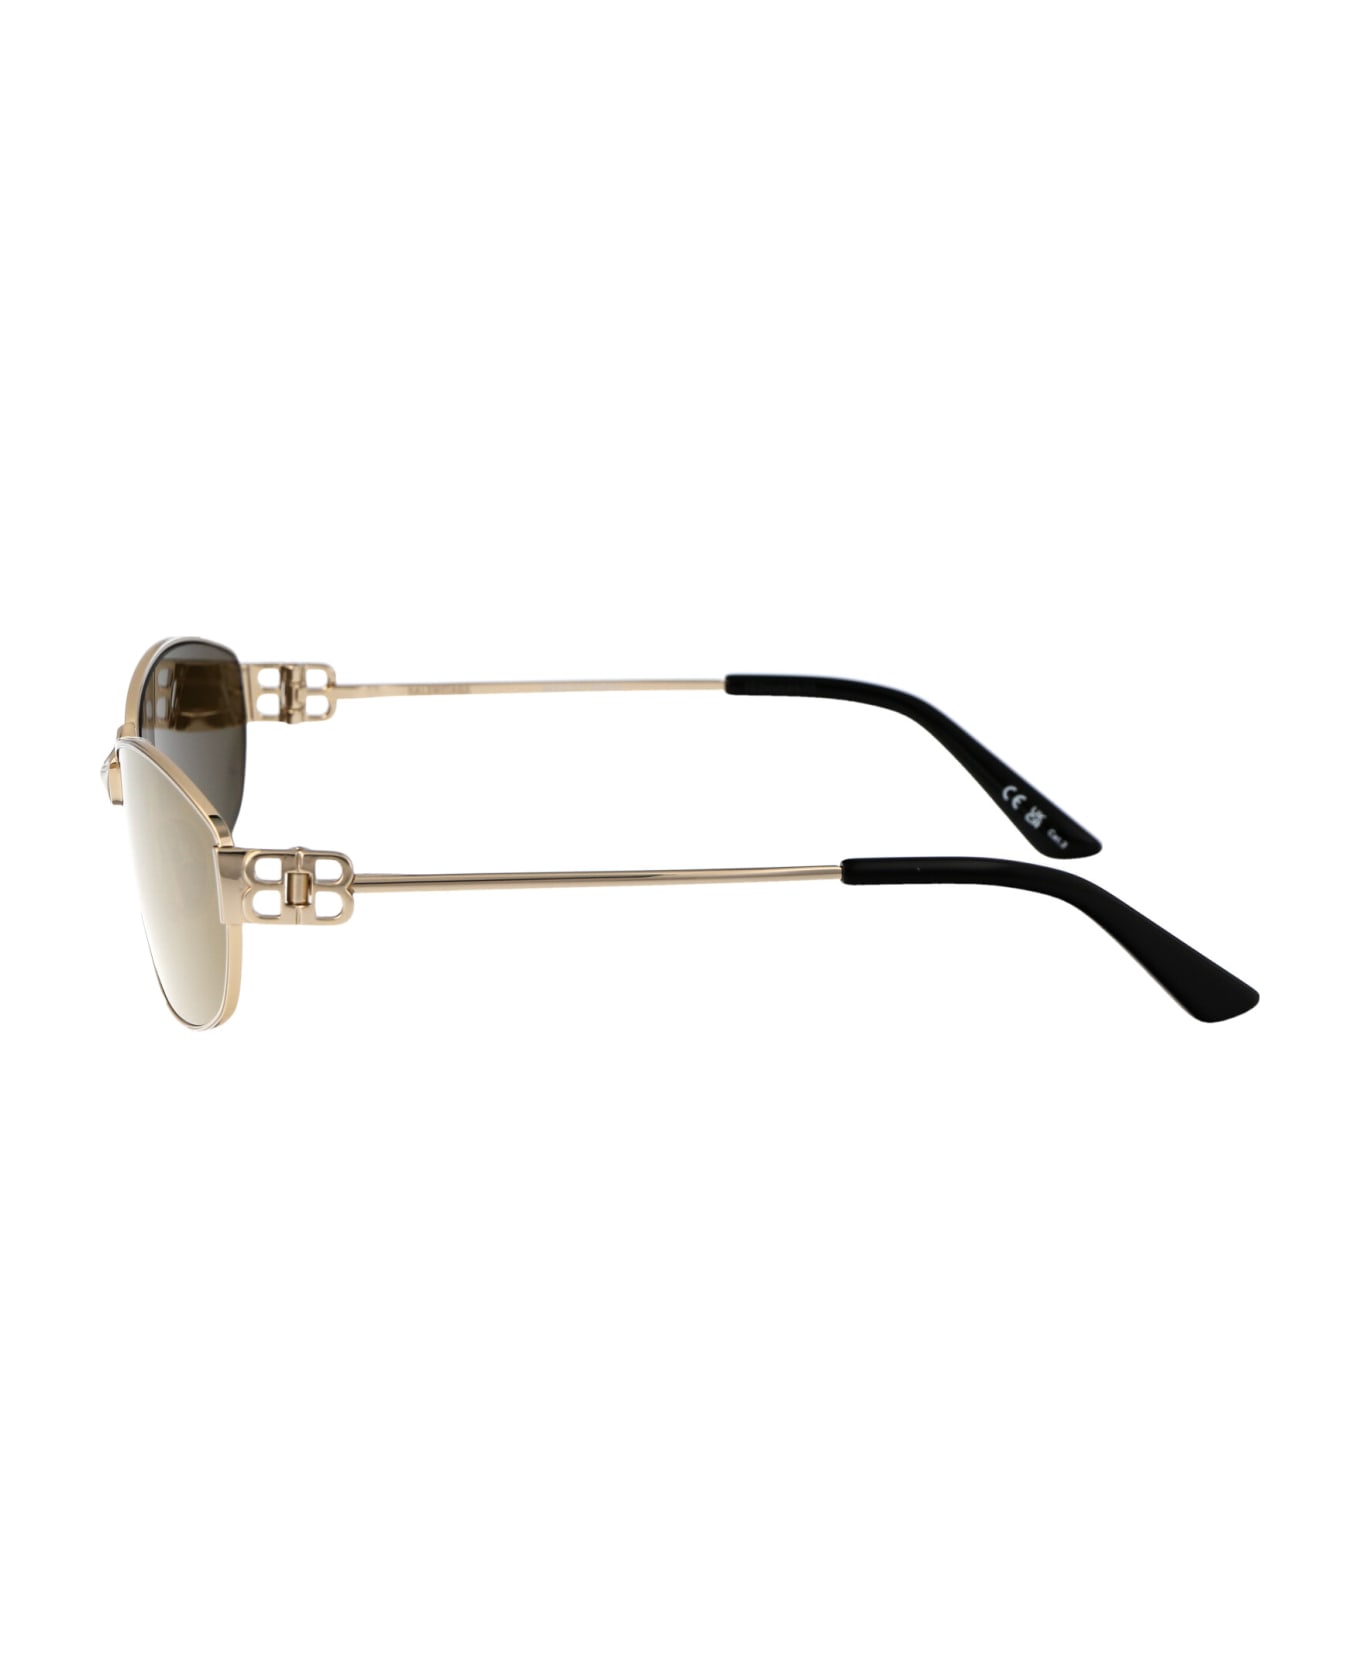 Balenciaga Eyewear Bb0336s Sunglasses - 003 GOLD GOLD BRONZE サングラス